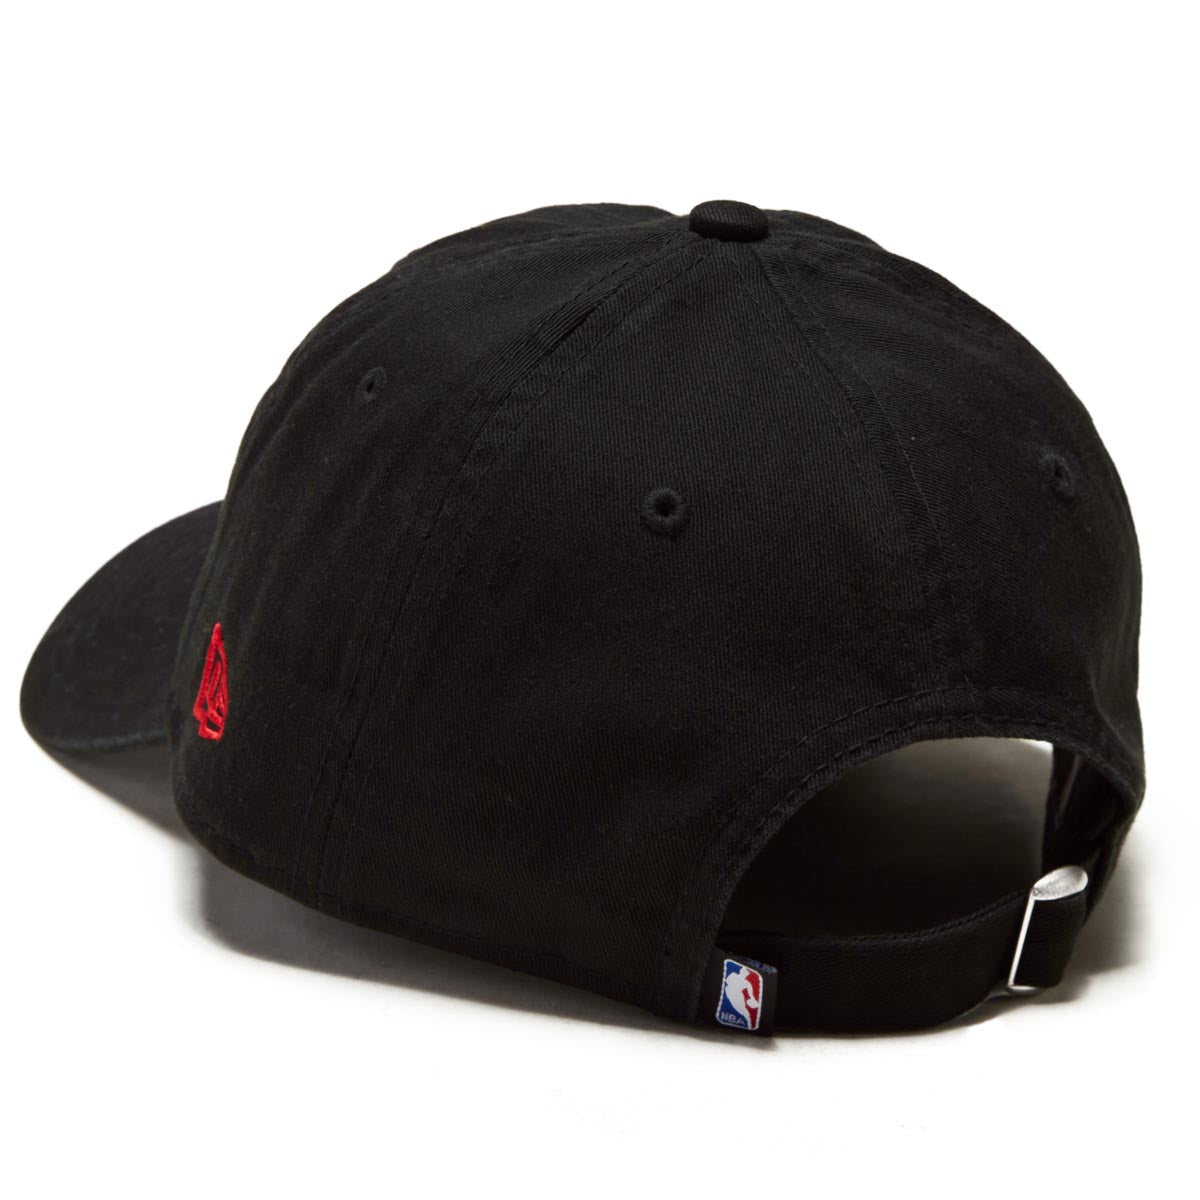 New Era x NBA 920 23 Portland Blazers Hat - Black/Red image 2